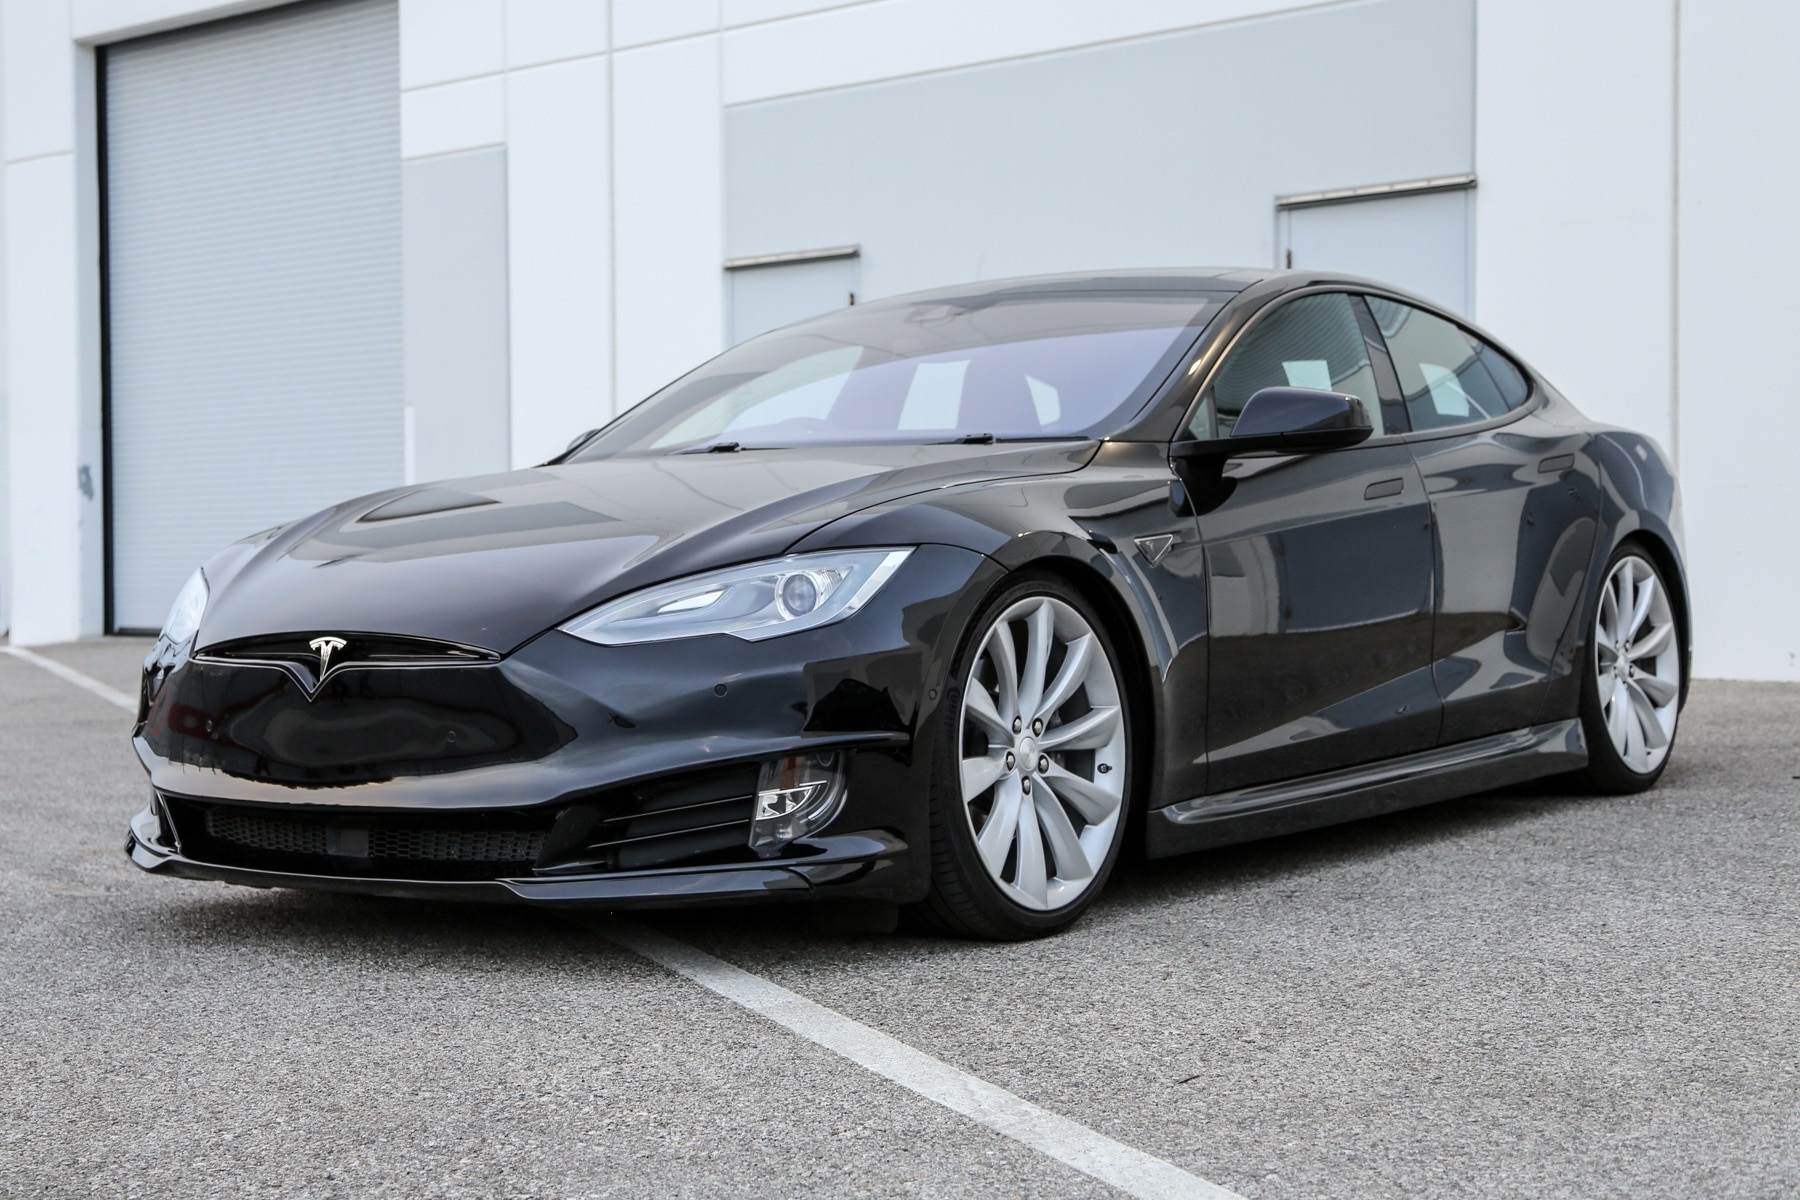 Tesla model performance. Tesla model s Performance. Tesla model s перфоманс. Model s Performance Тесла. Tesla model s Performance 2020.